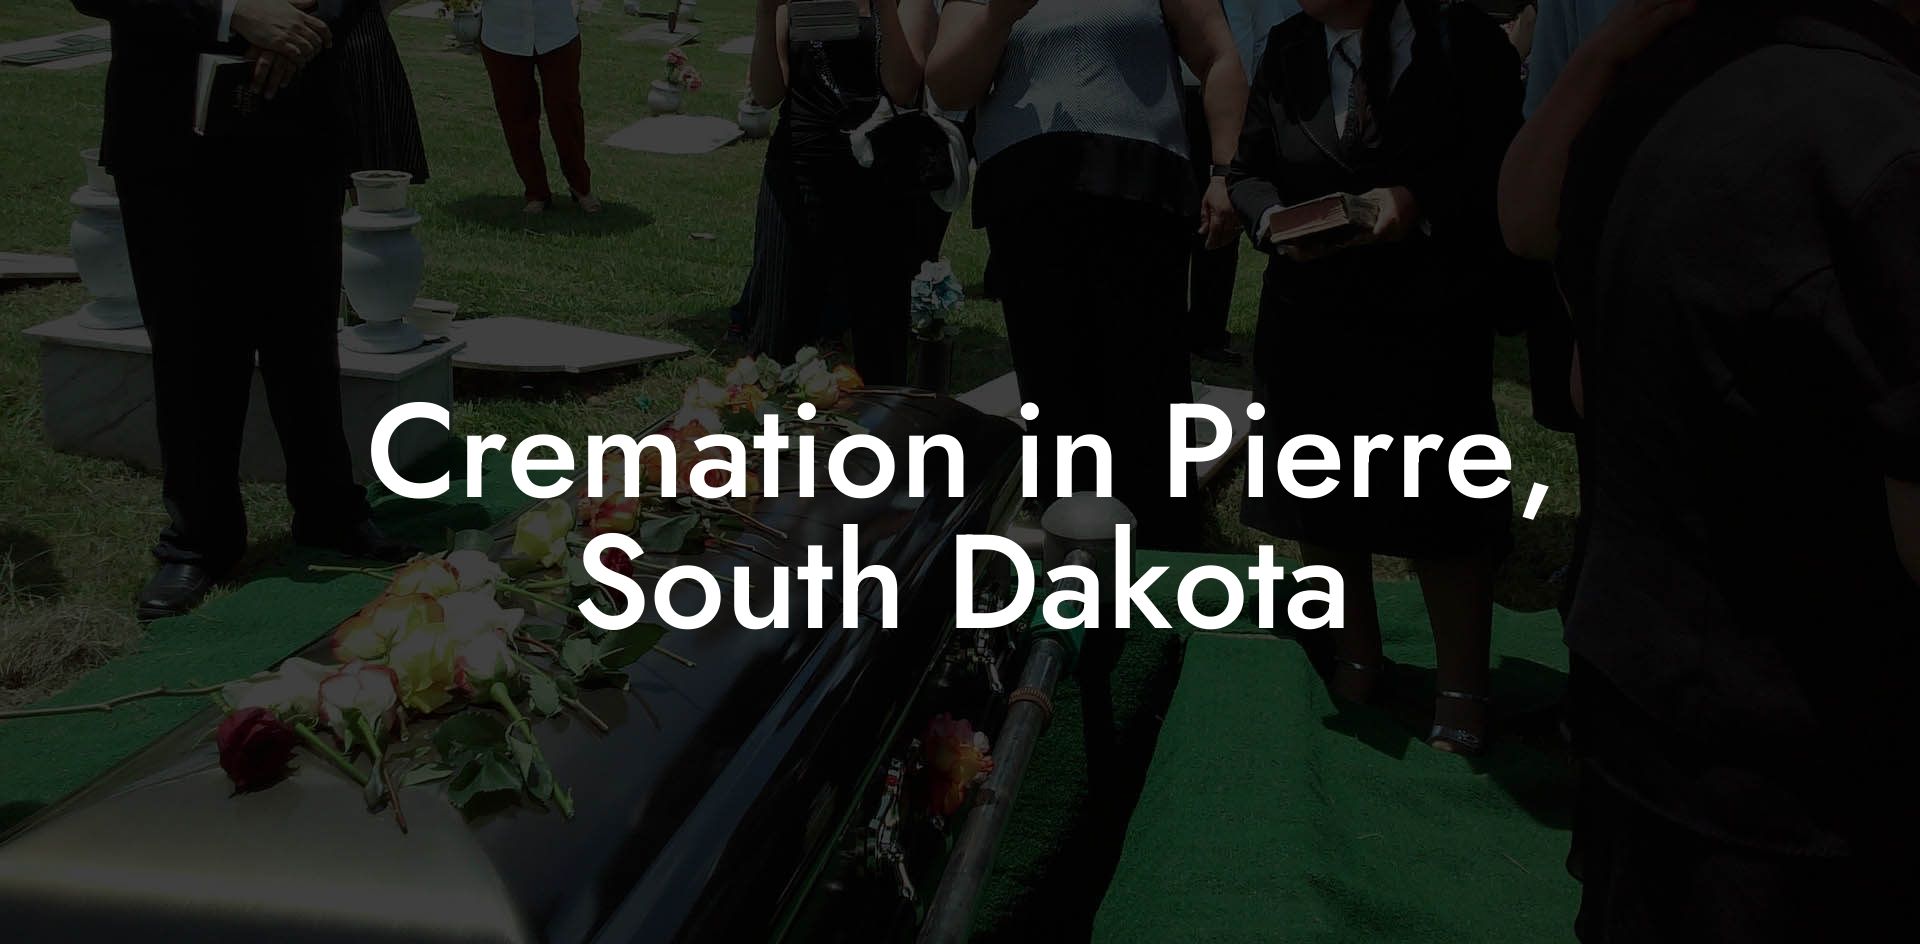 Cremation in Pierre, South Dakota